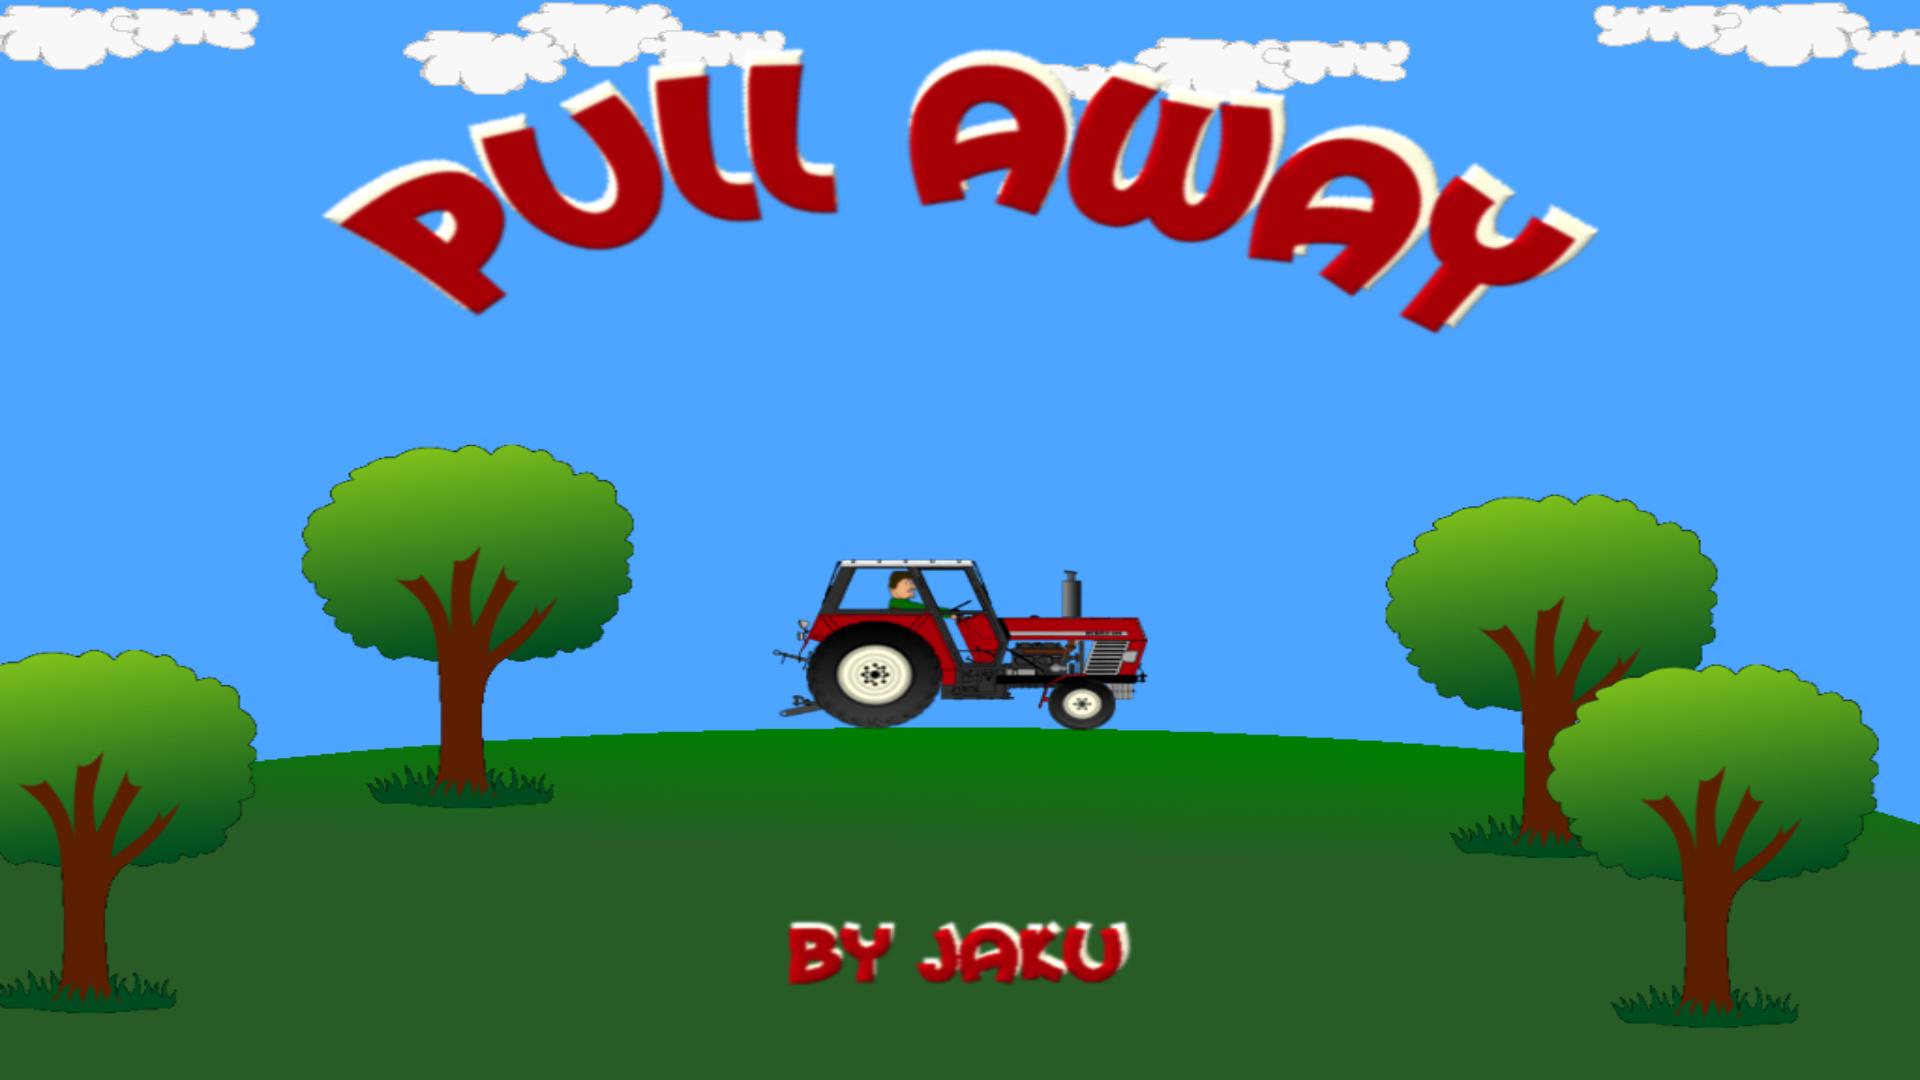 Pull away